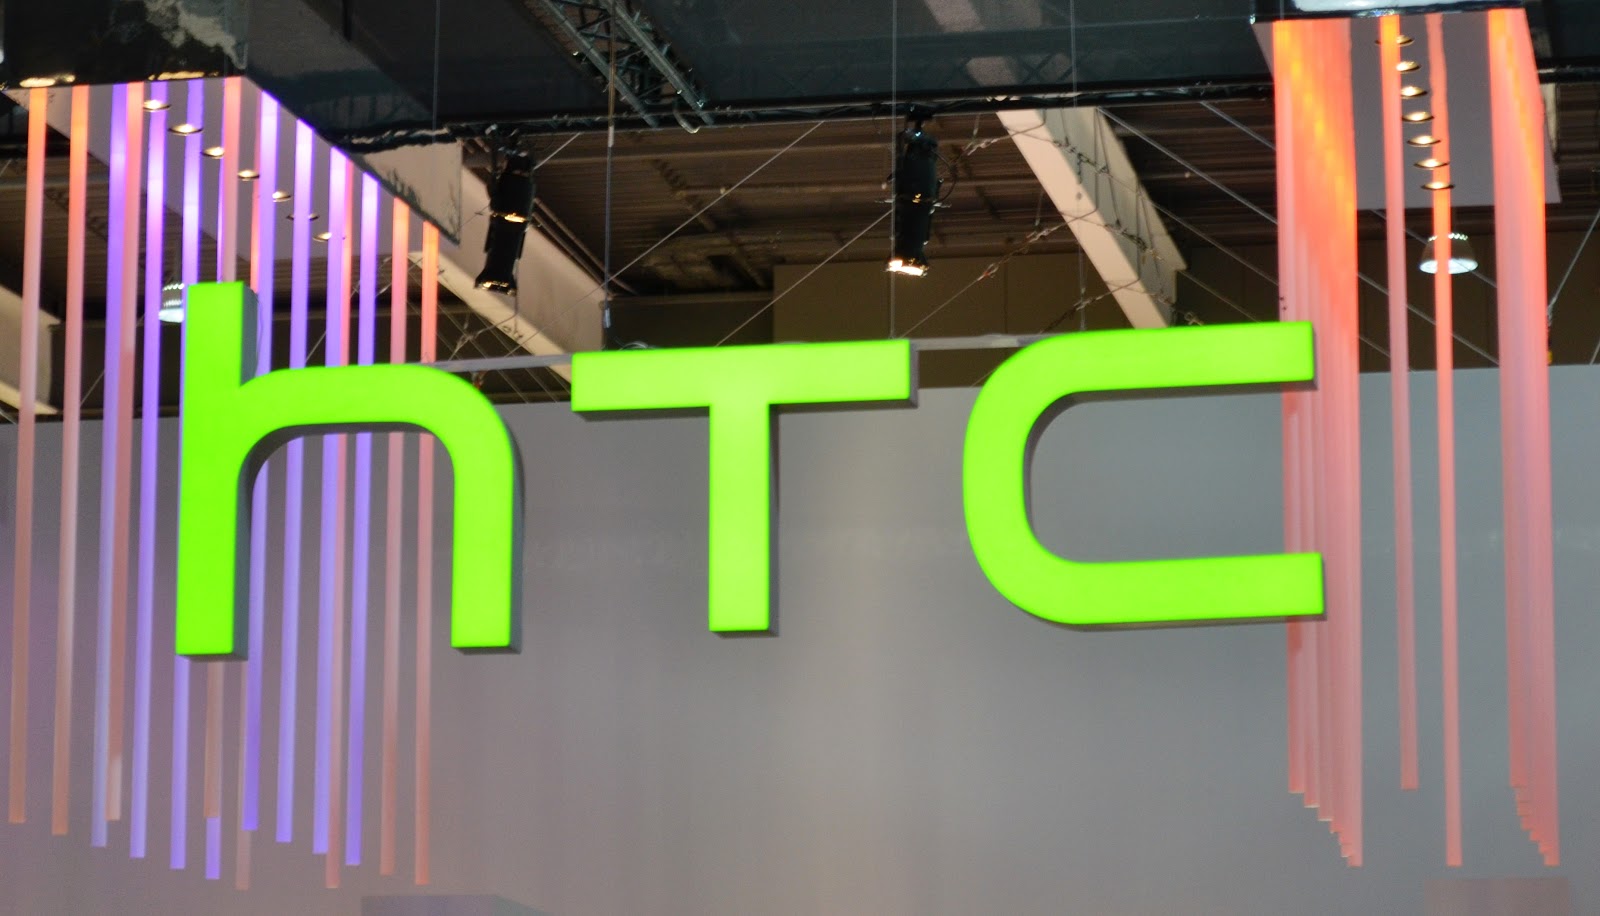 HTC inregistreaza o creștere a veniturilor cu 25.92% in octombrie comparativ cu luna precedenta